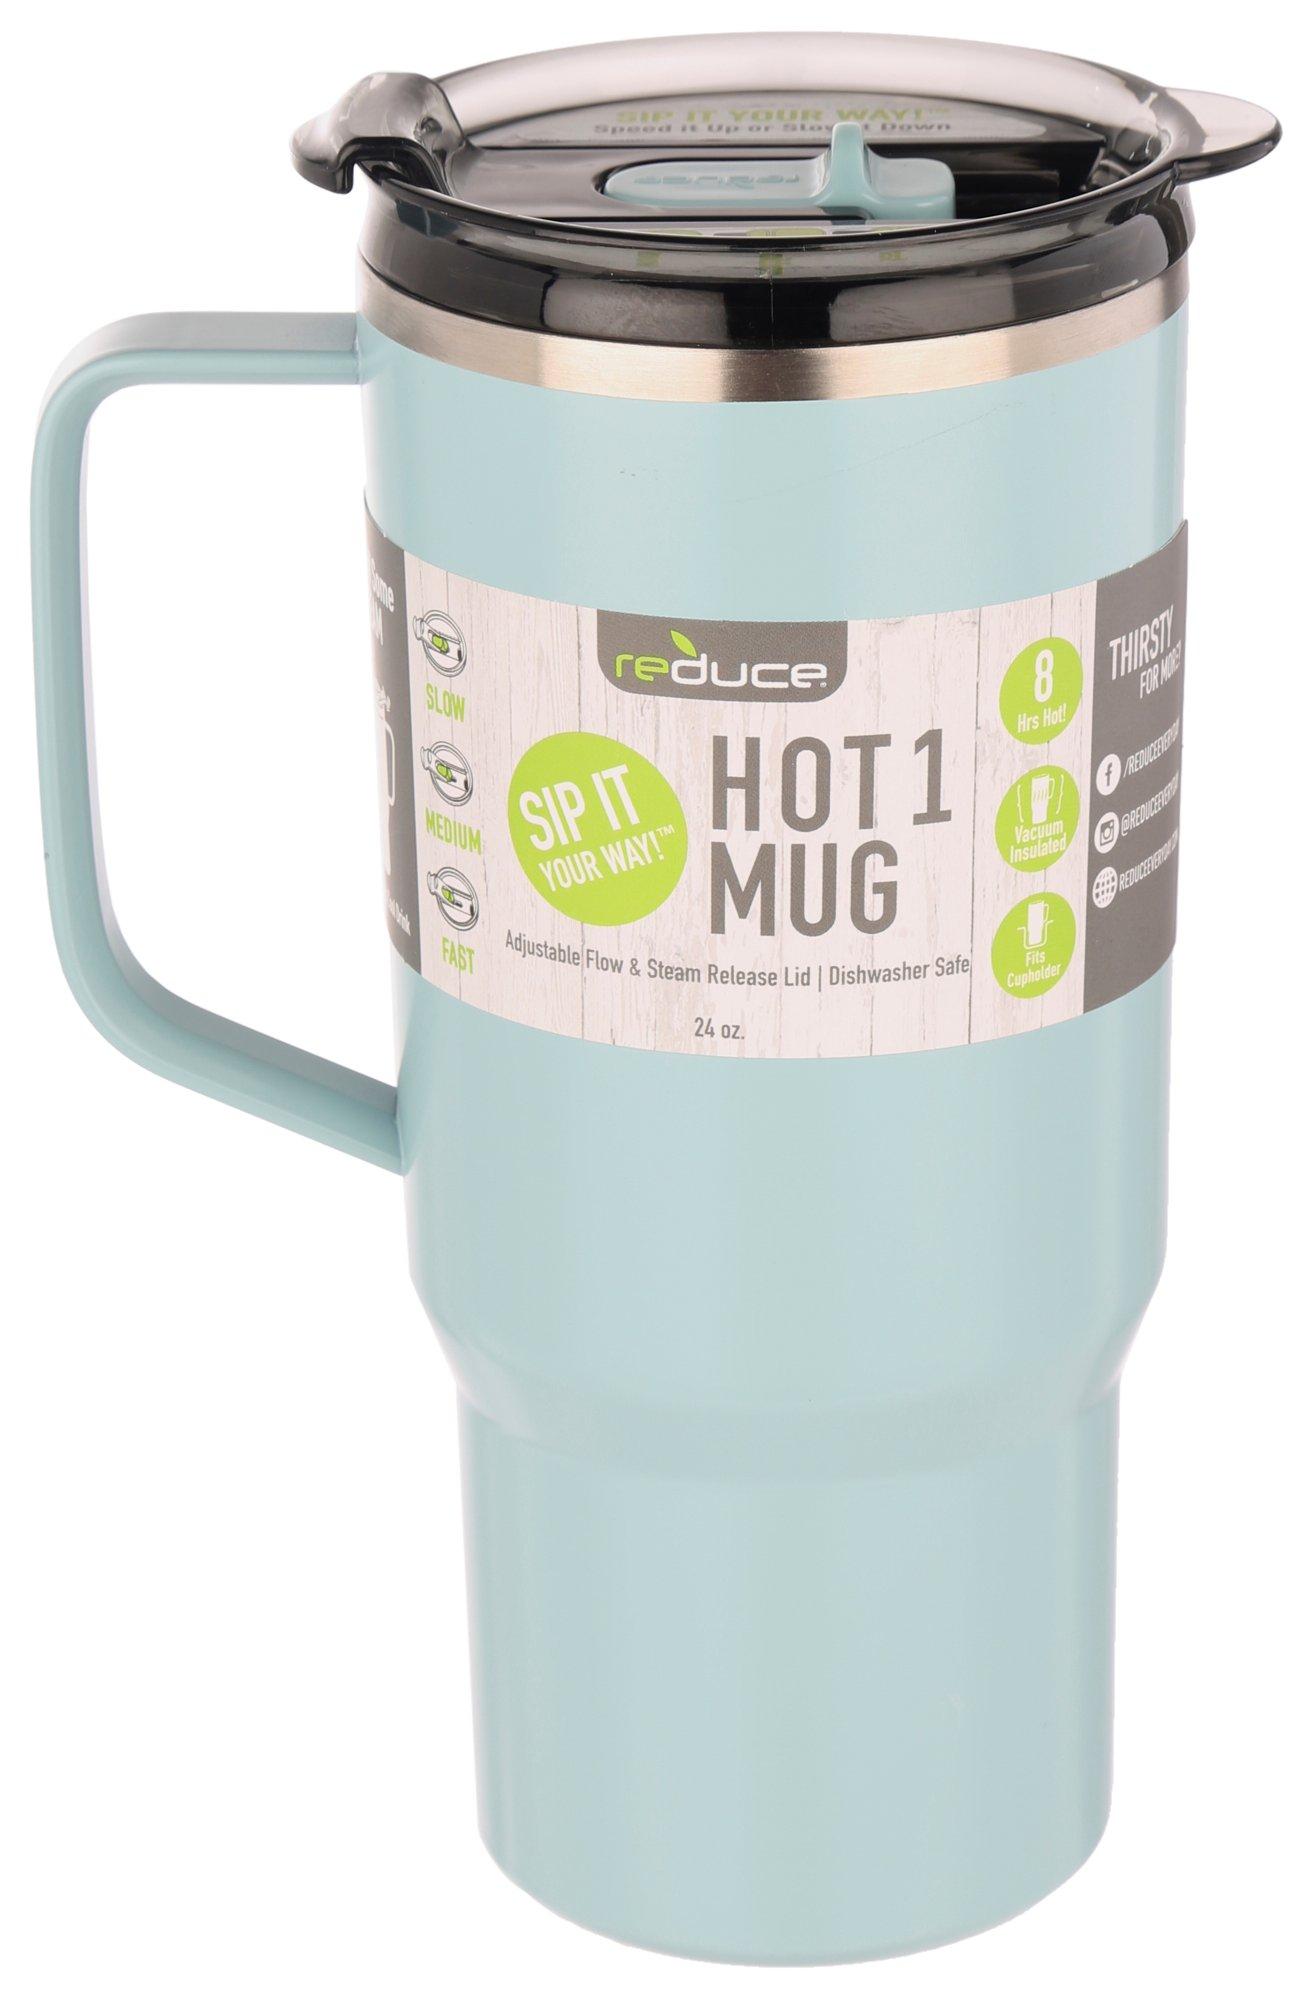 Reduce Hot1 Travel Mug - Eucalyptus 24 oz